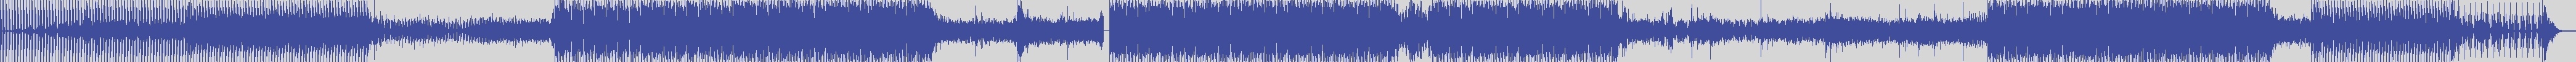 atomic_recordings [AR018] Alex Kenji - Japan [Original Mix] audio wave form